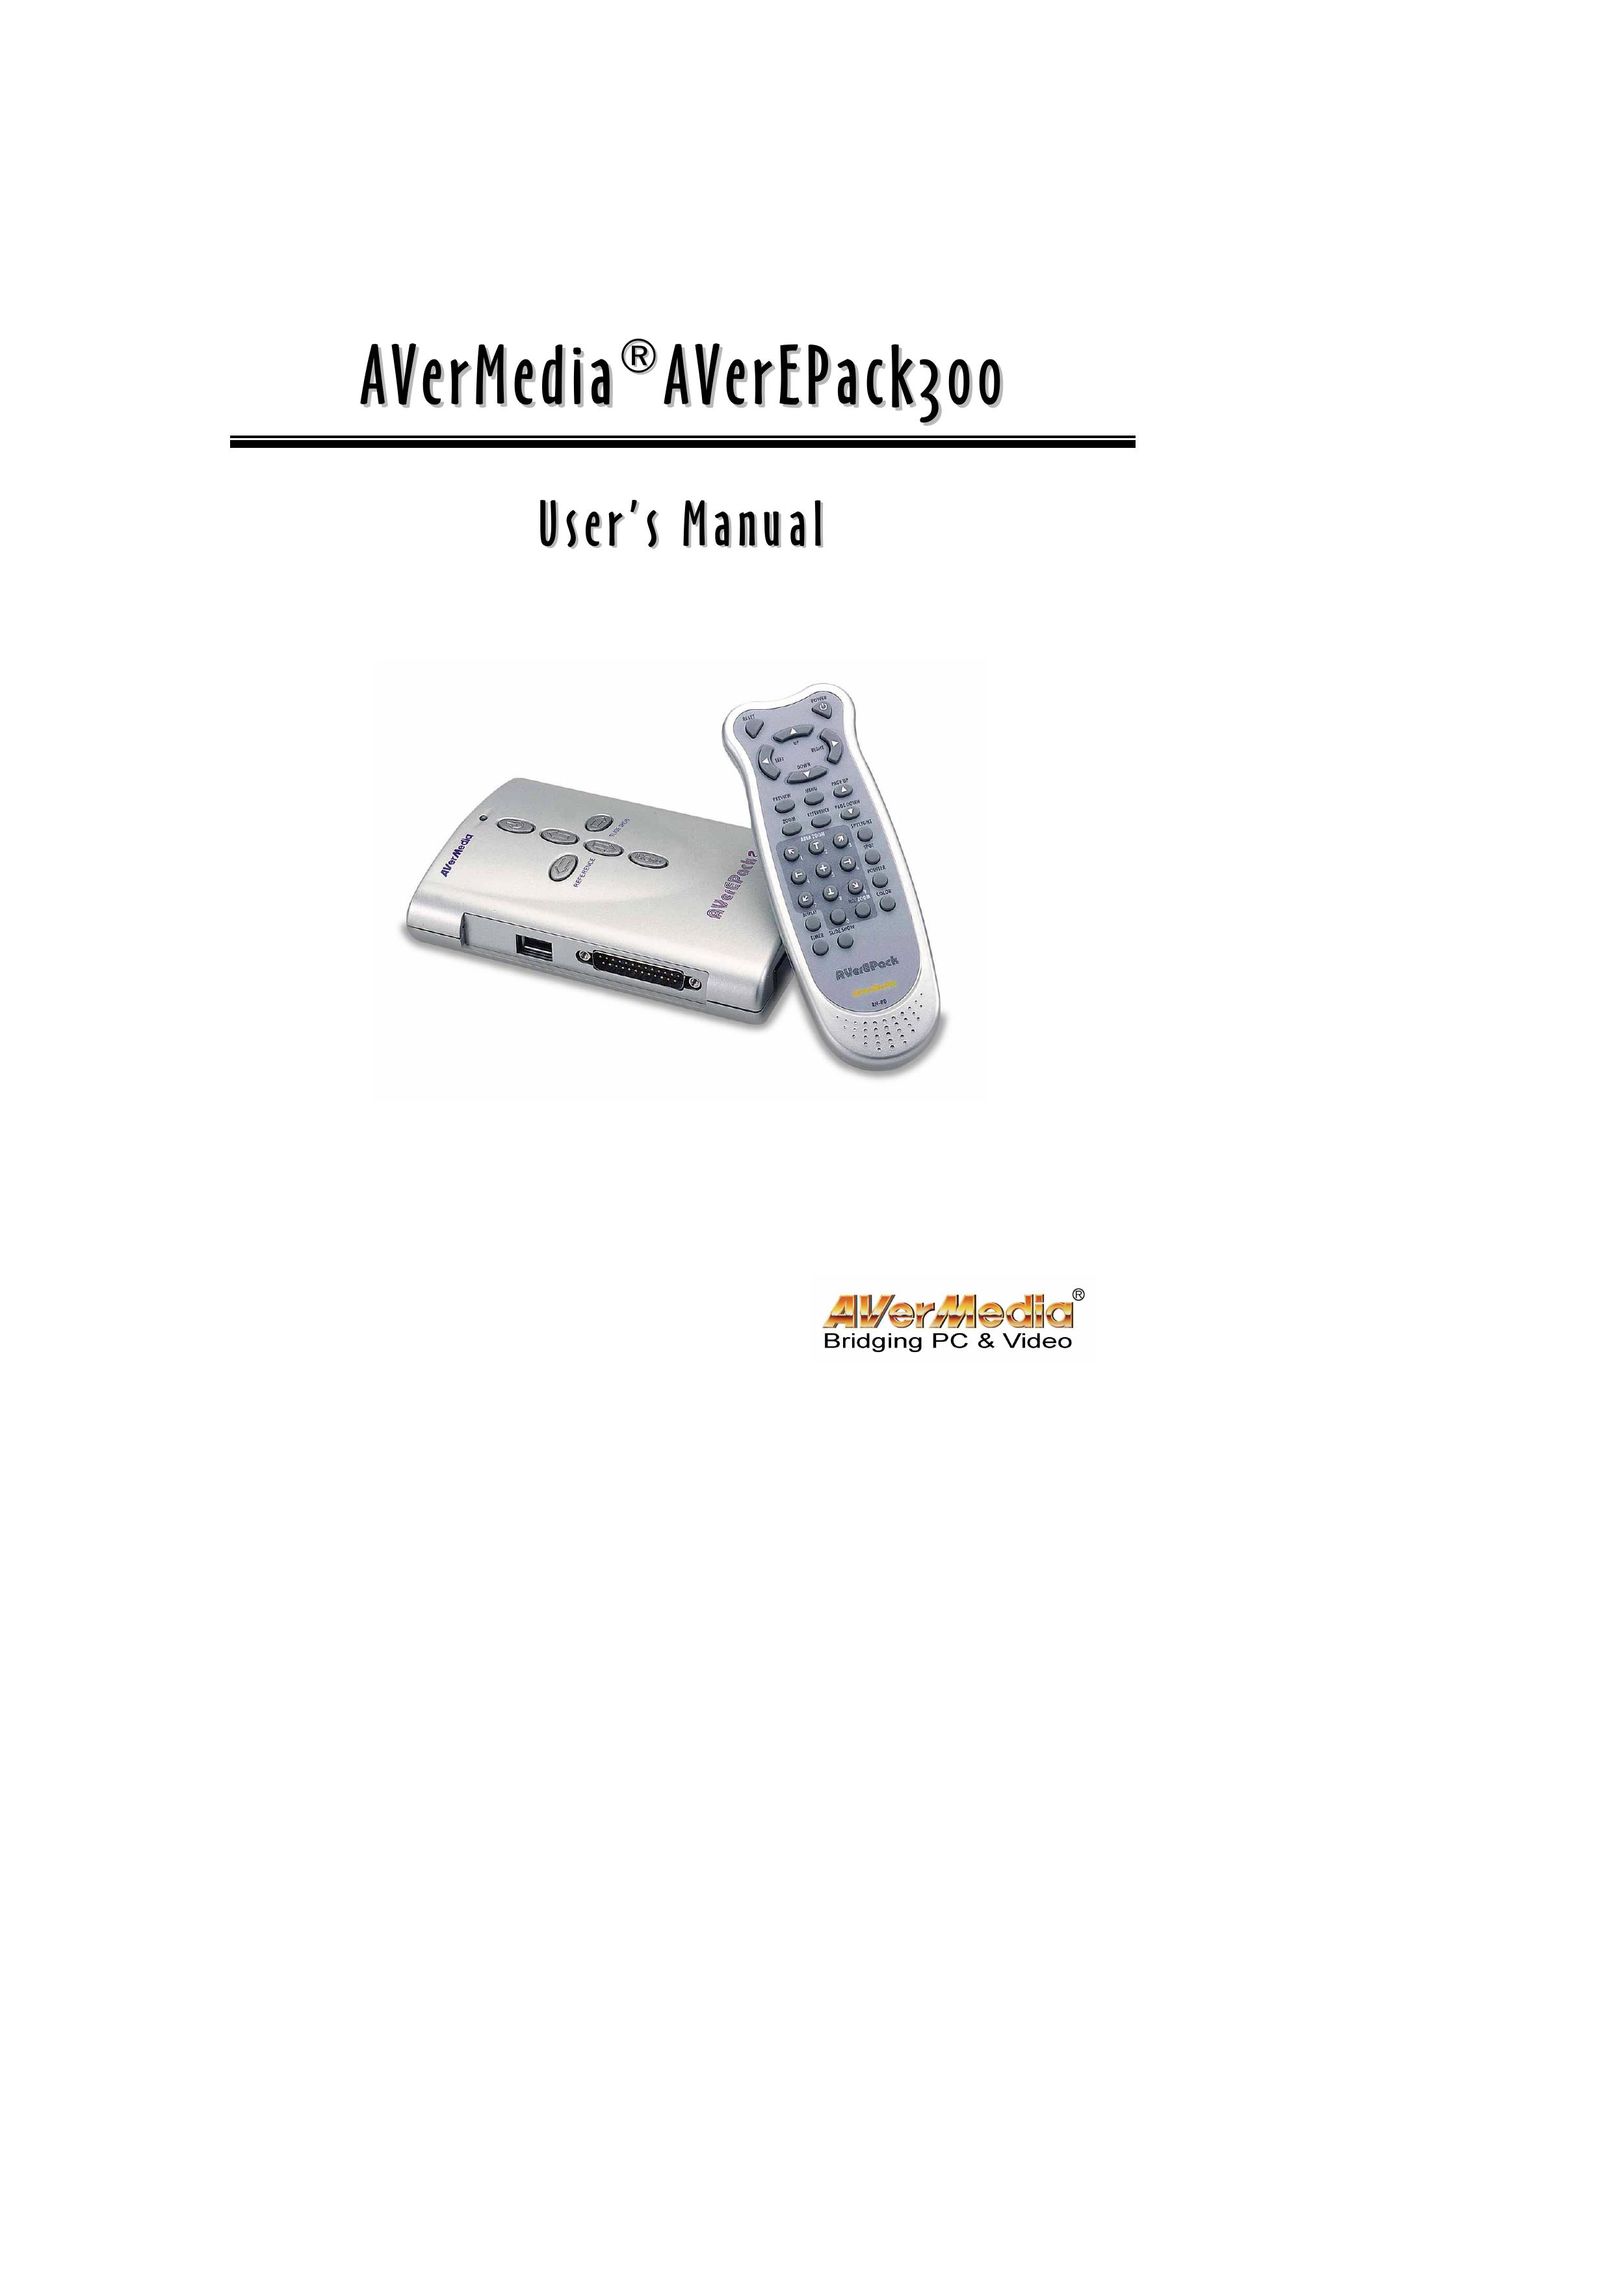 AVerMedia Technologies AverEPack300 Universal Remote User Manual